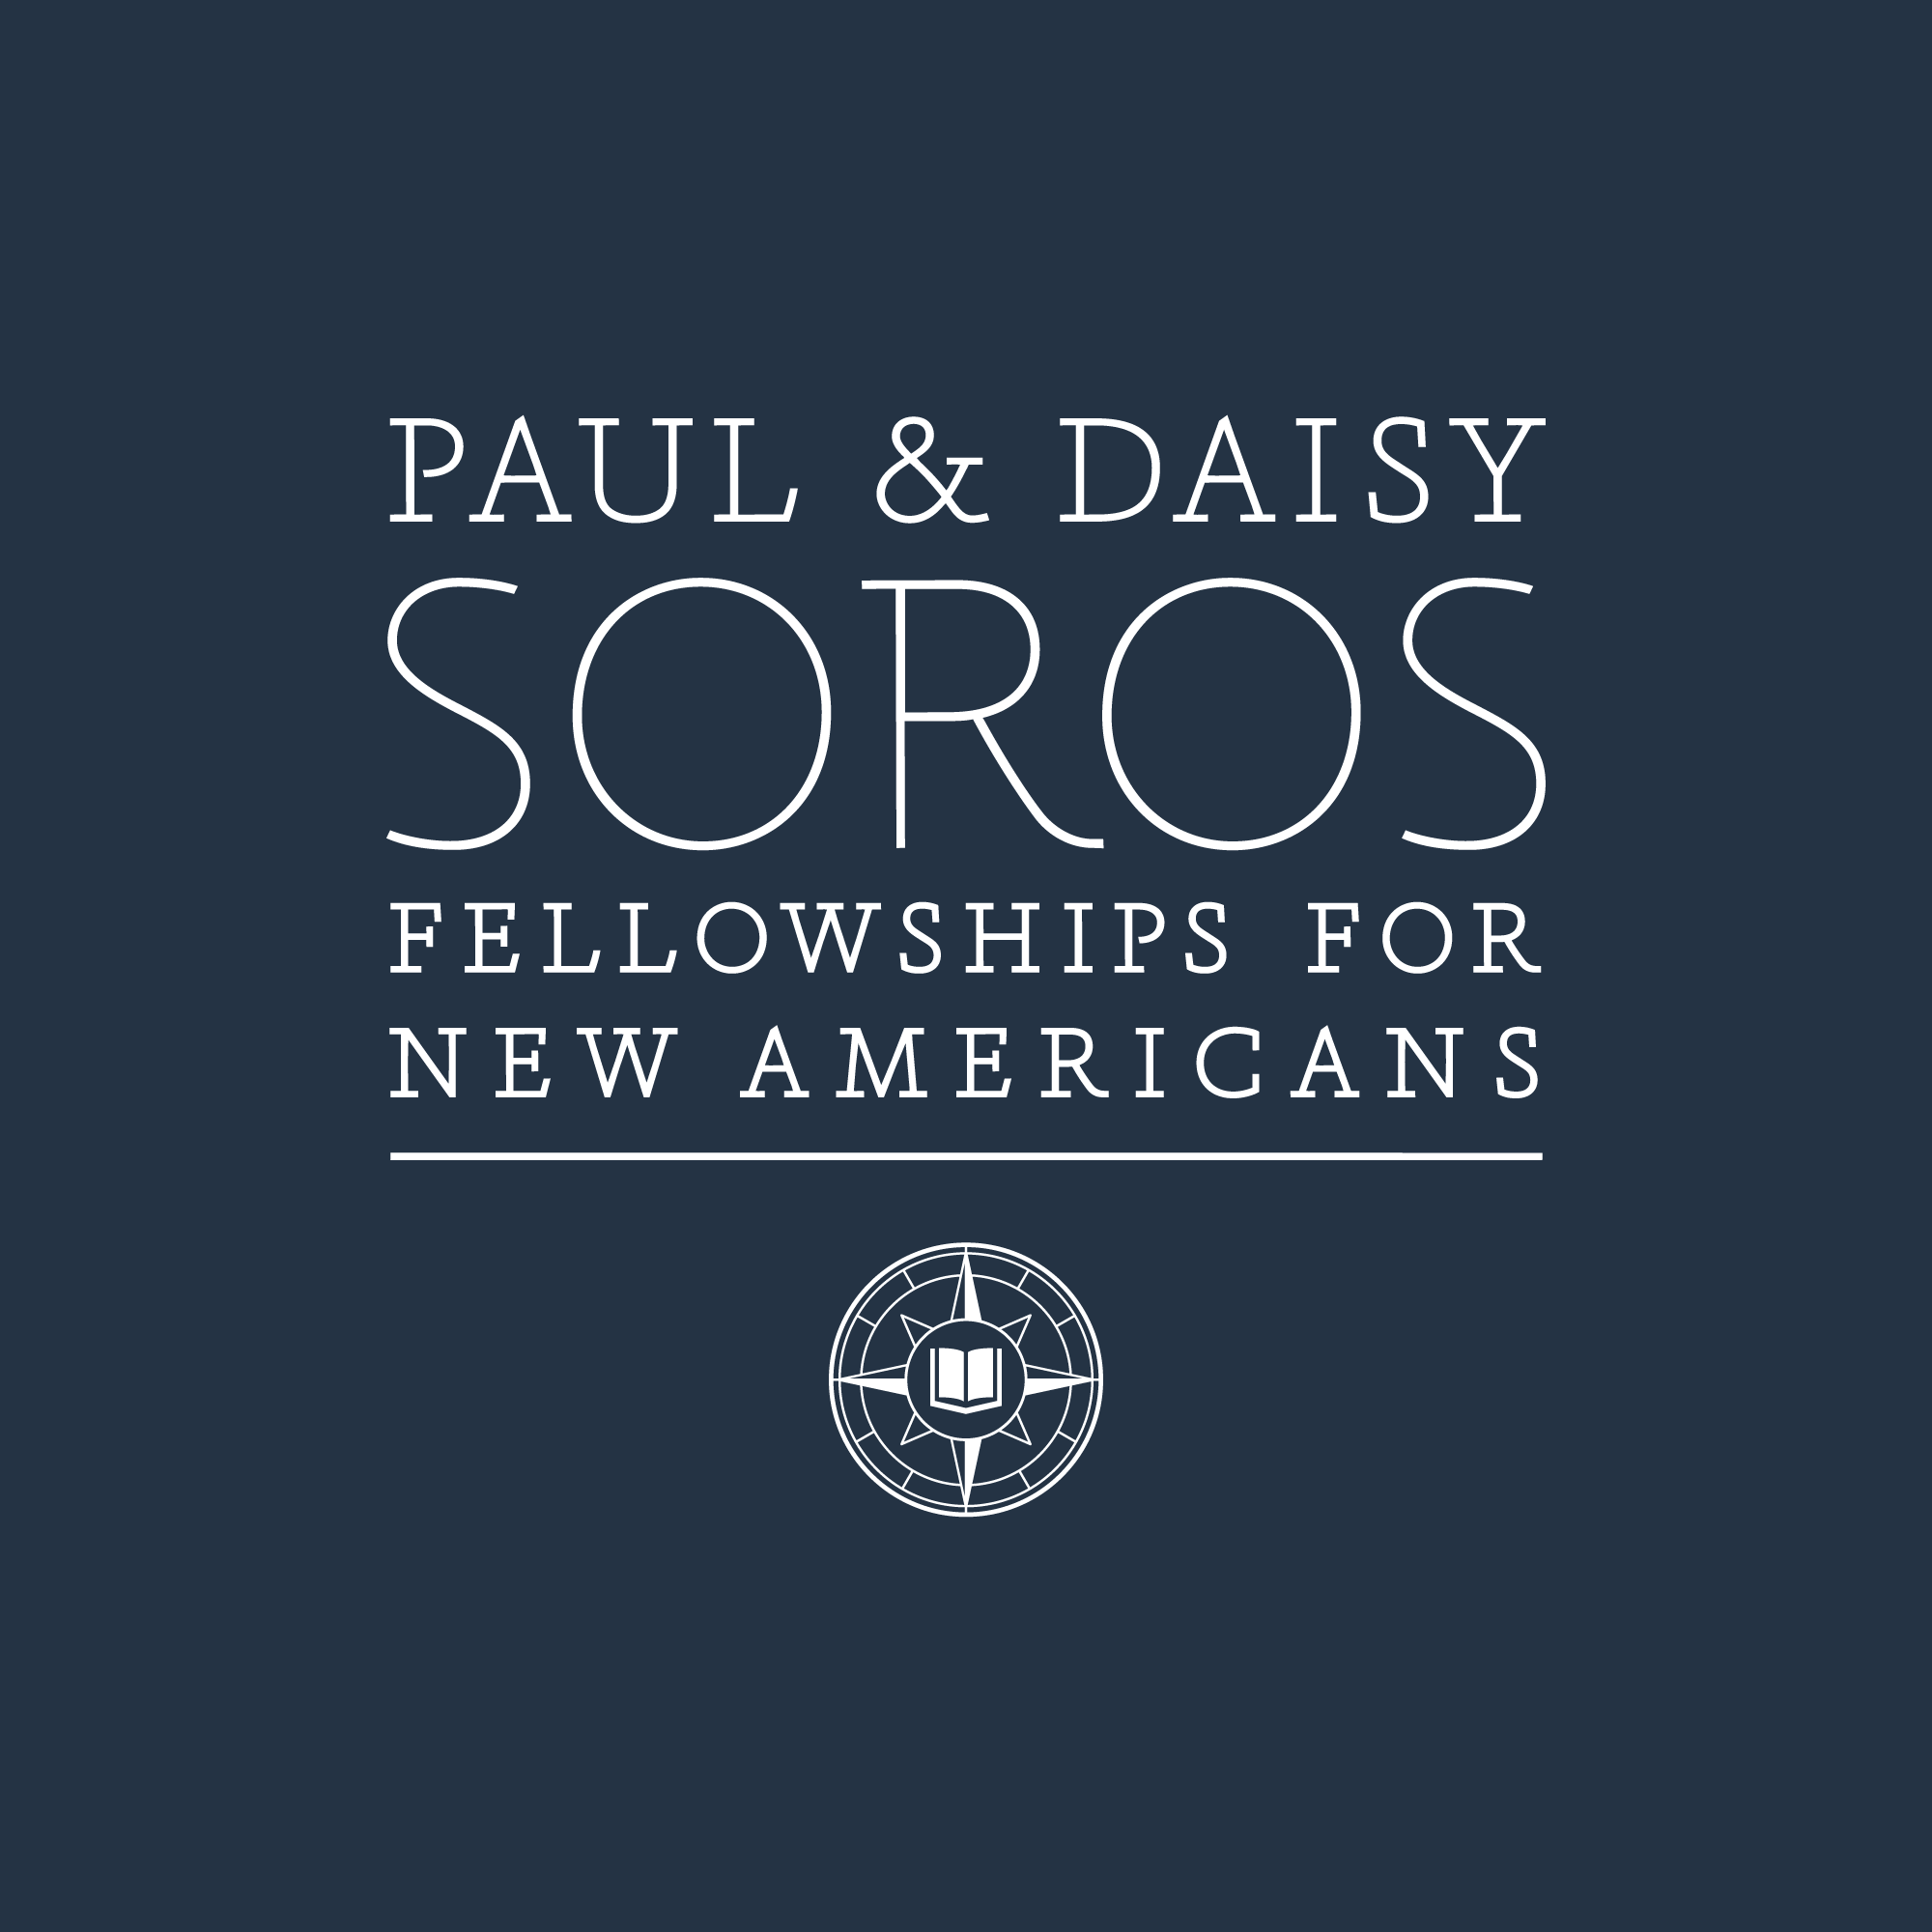 Paul & Daisy Soros Fellowships for New Americans logo